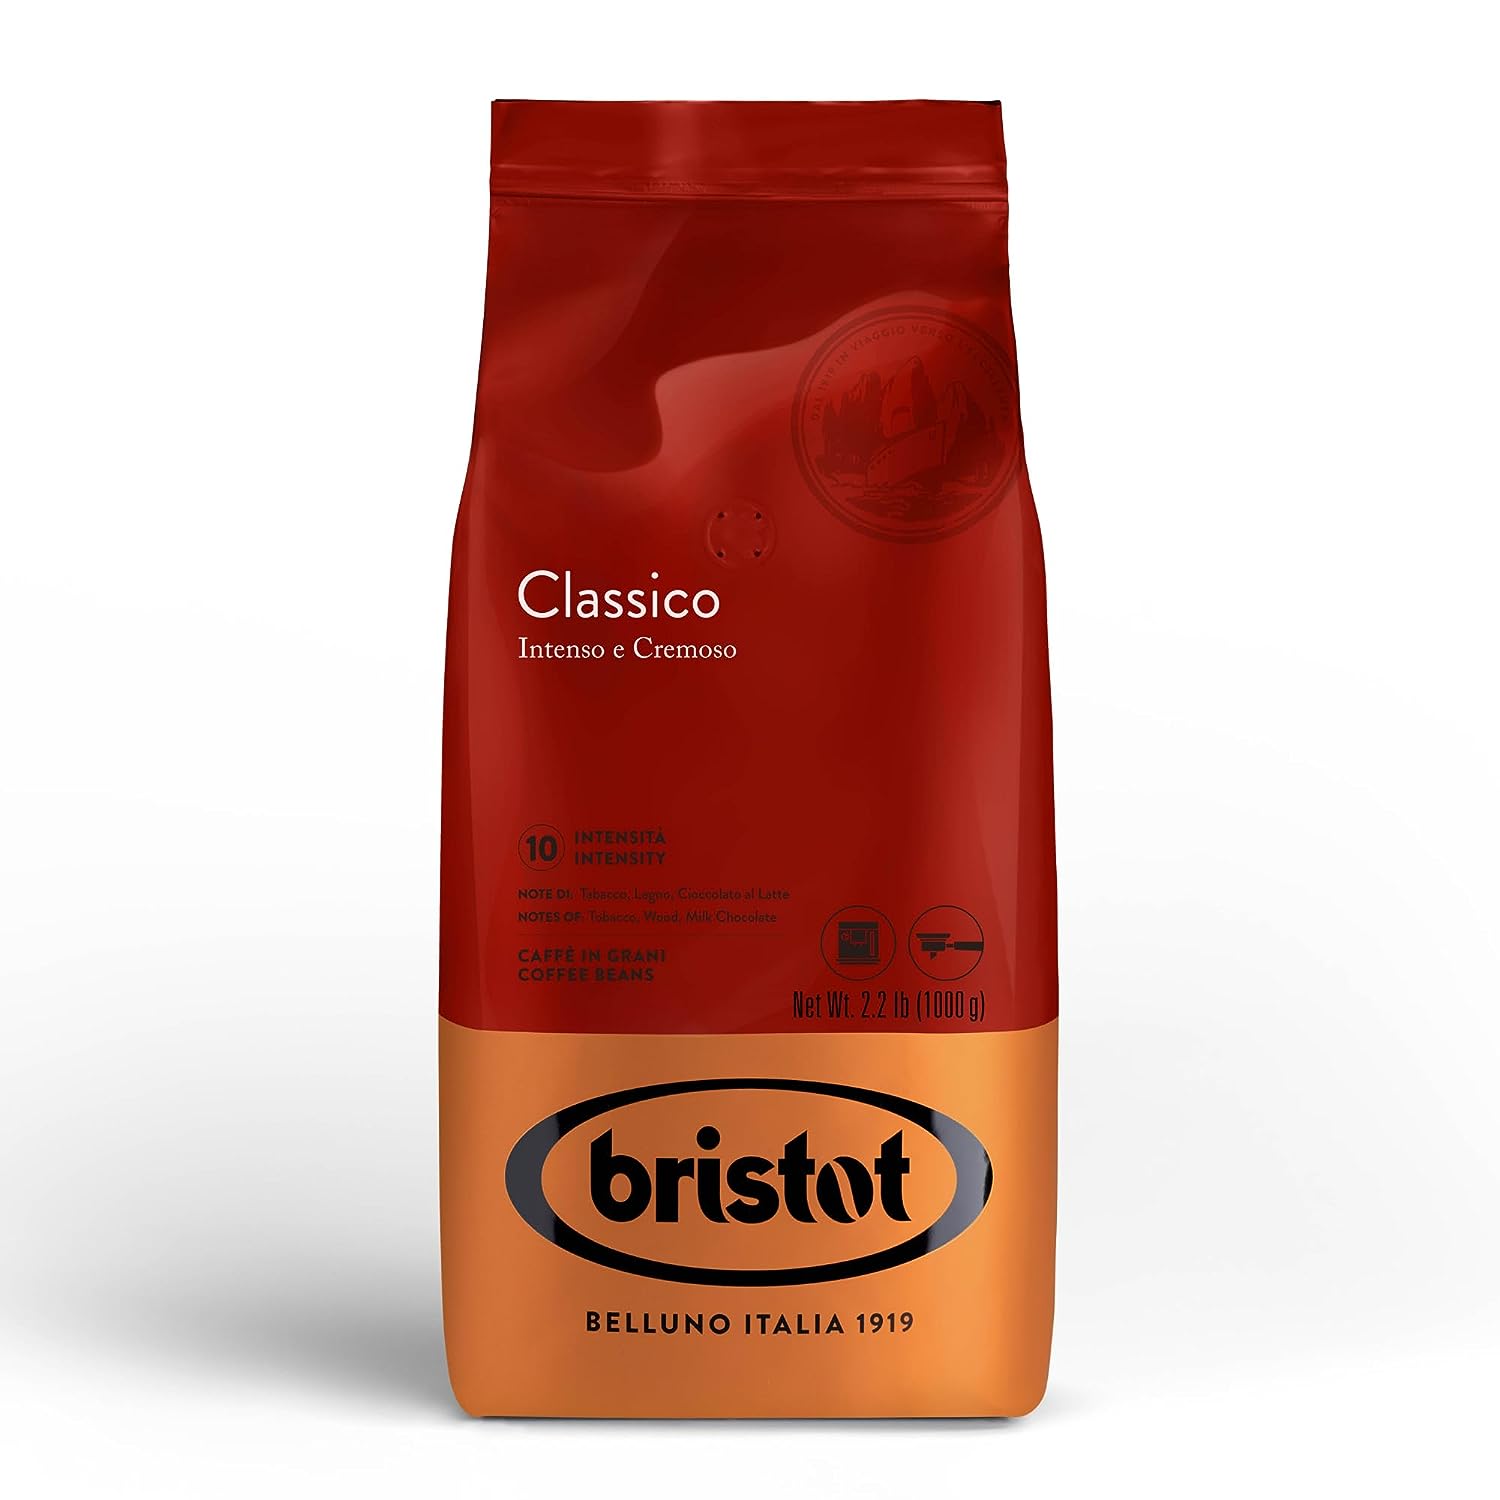 Bristot Classico Intenso e Cremoso Espresso Beans | Medium Roast Italian Espresso Beans |